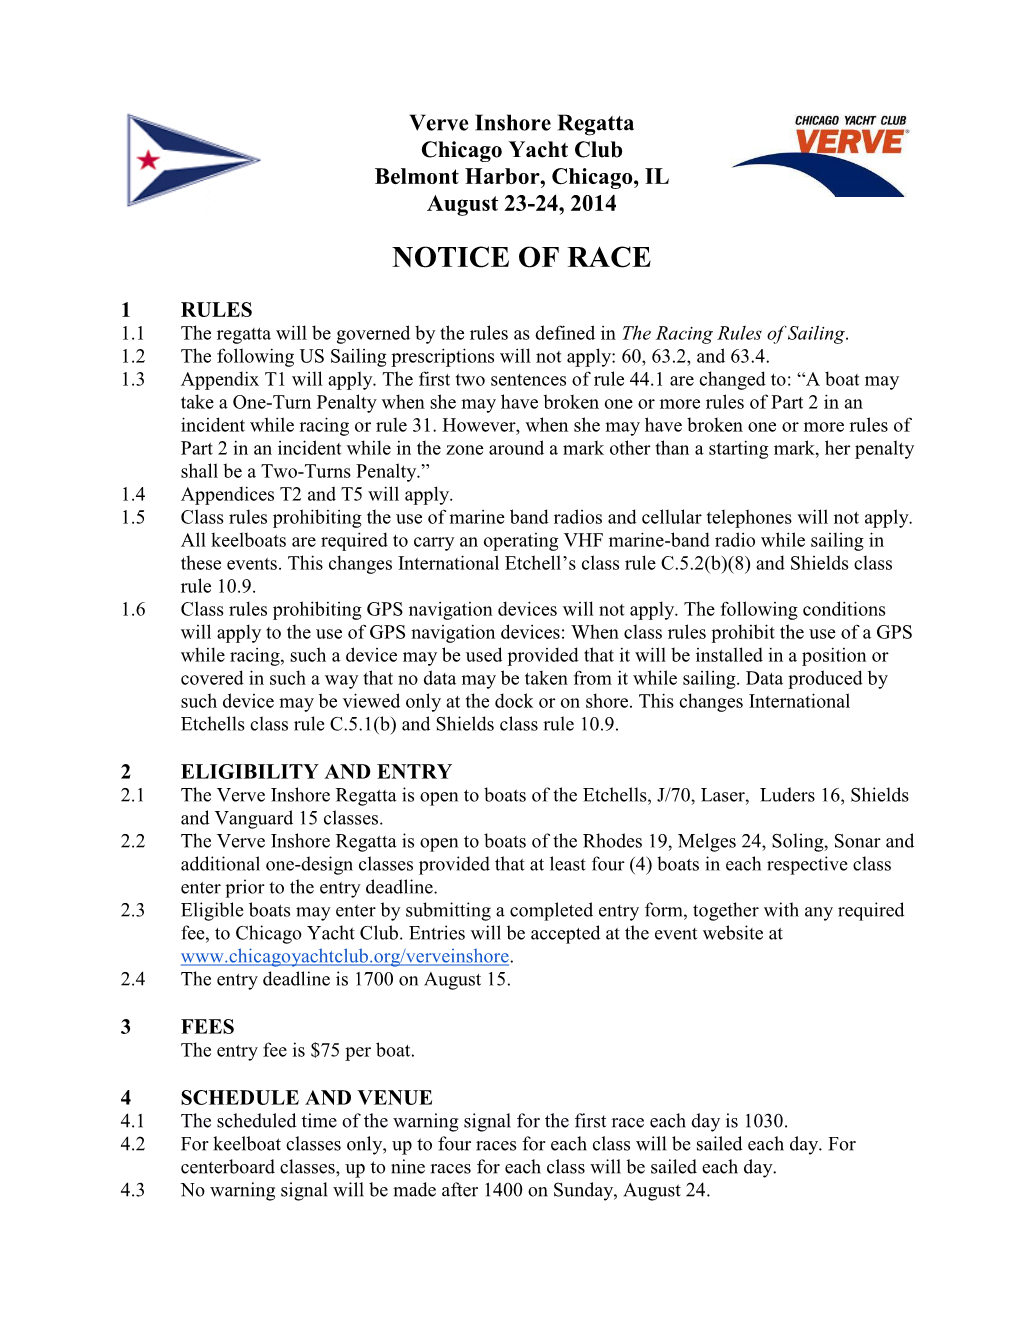 Verve Inshore Notice of Race 2014.Docx